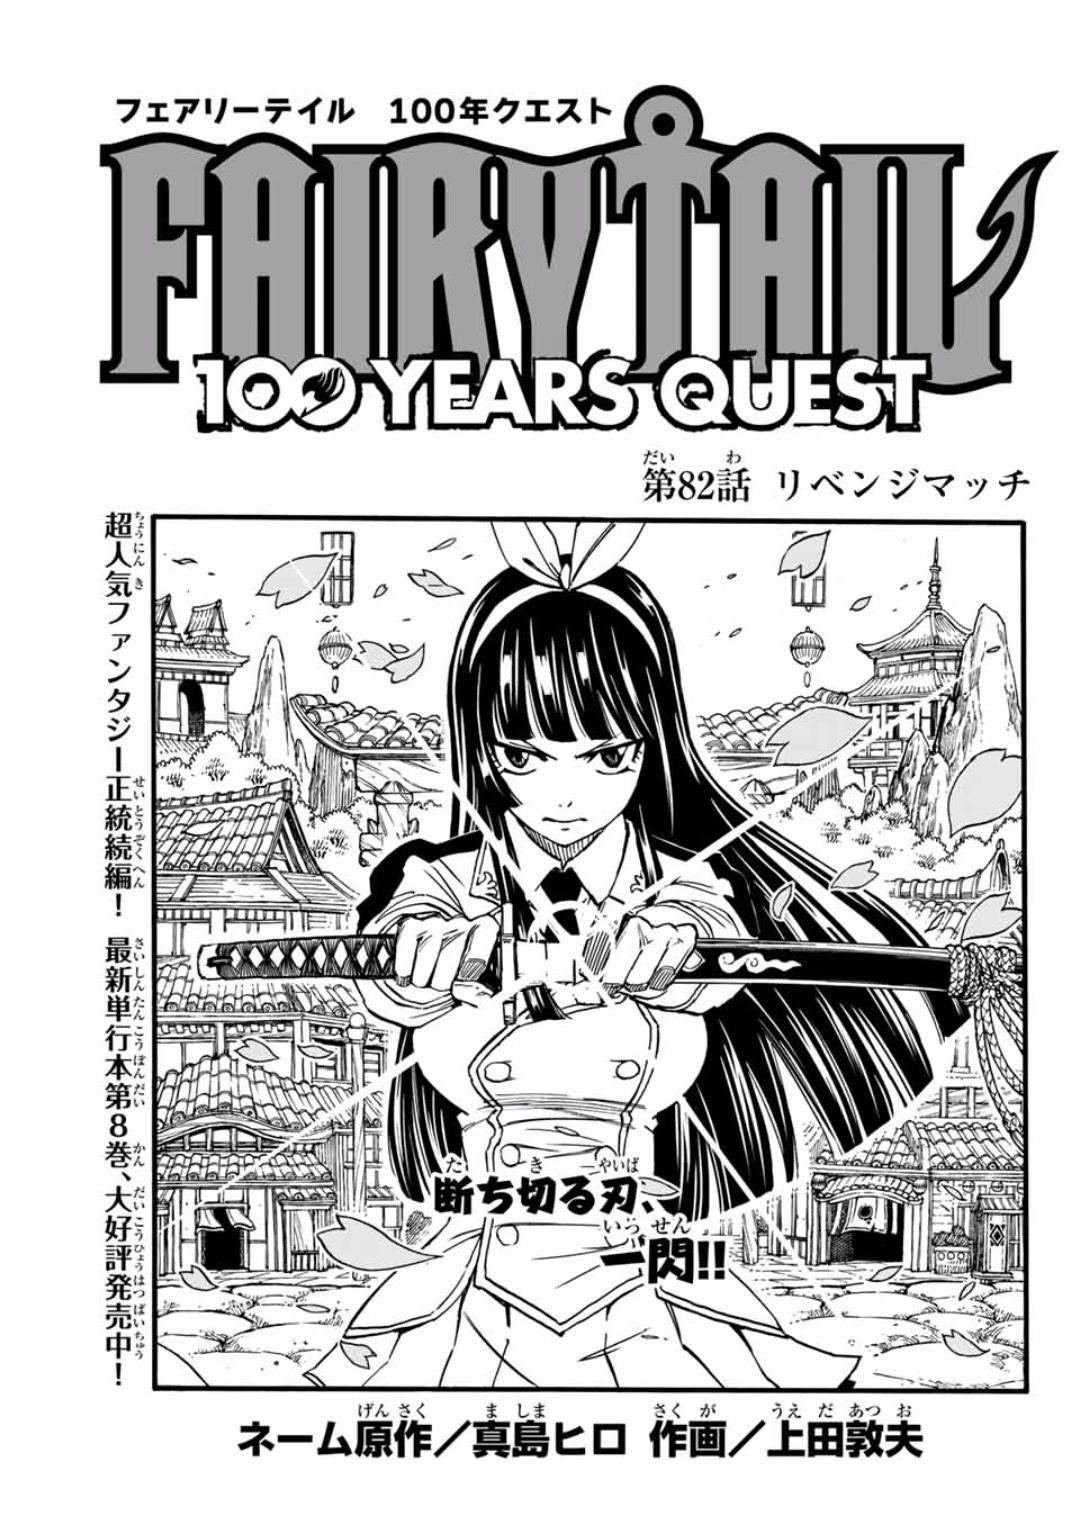 Fairy Tail 100 Years Quest Fairy Tail Wiki Fandom